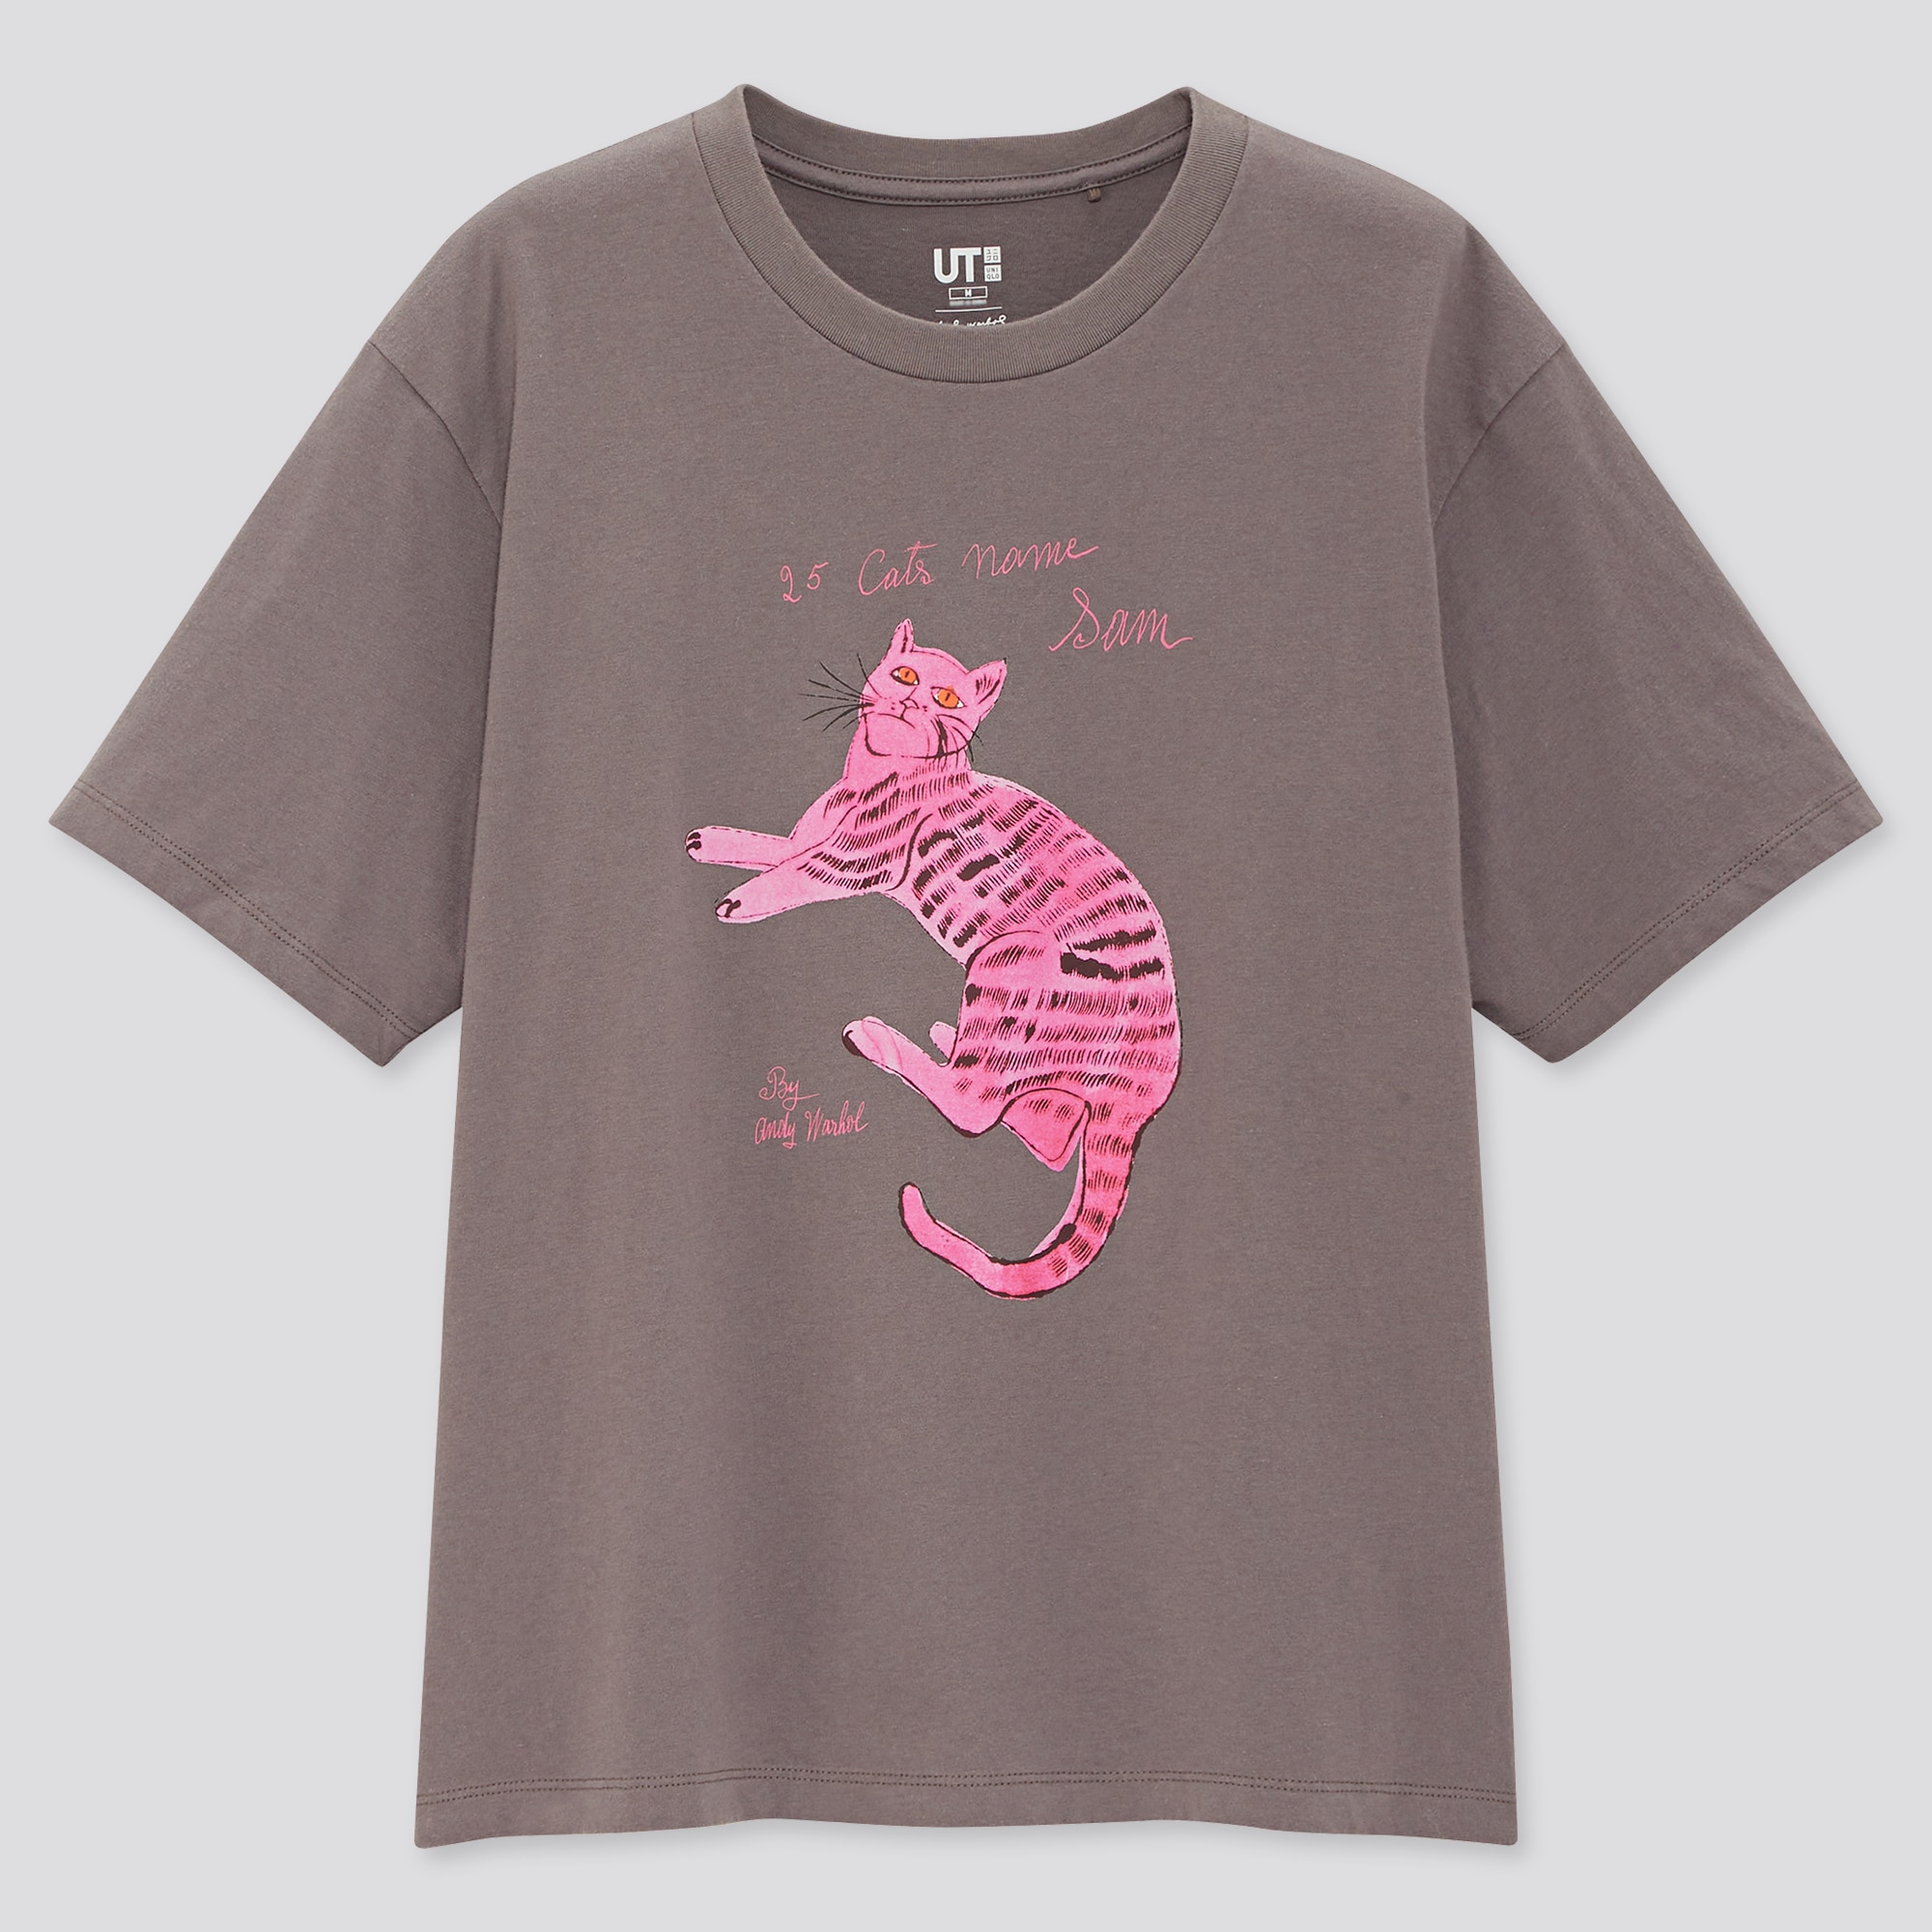 andy warhol cat shirt